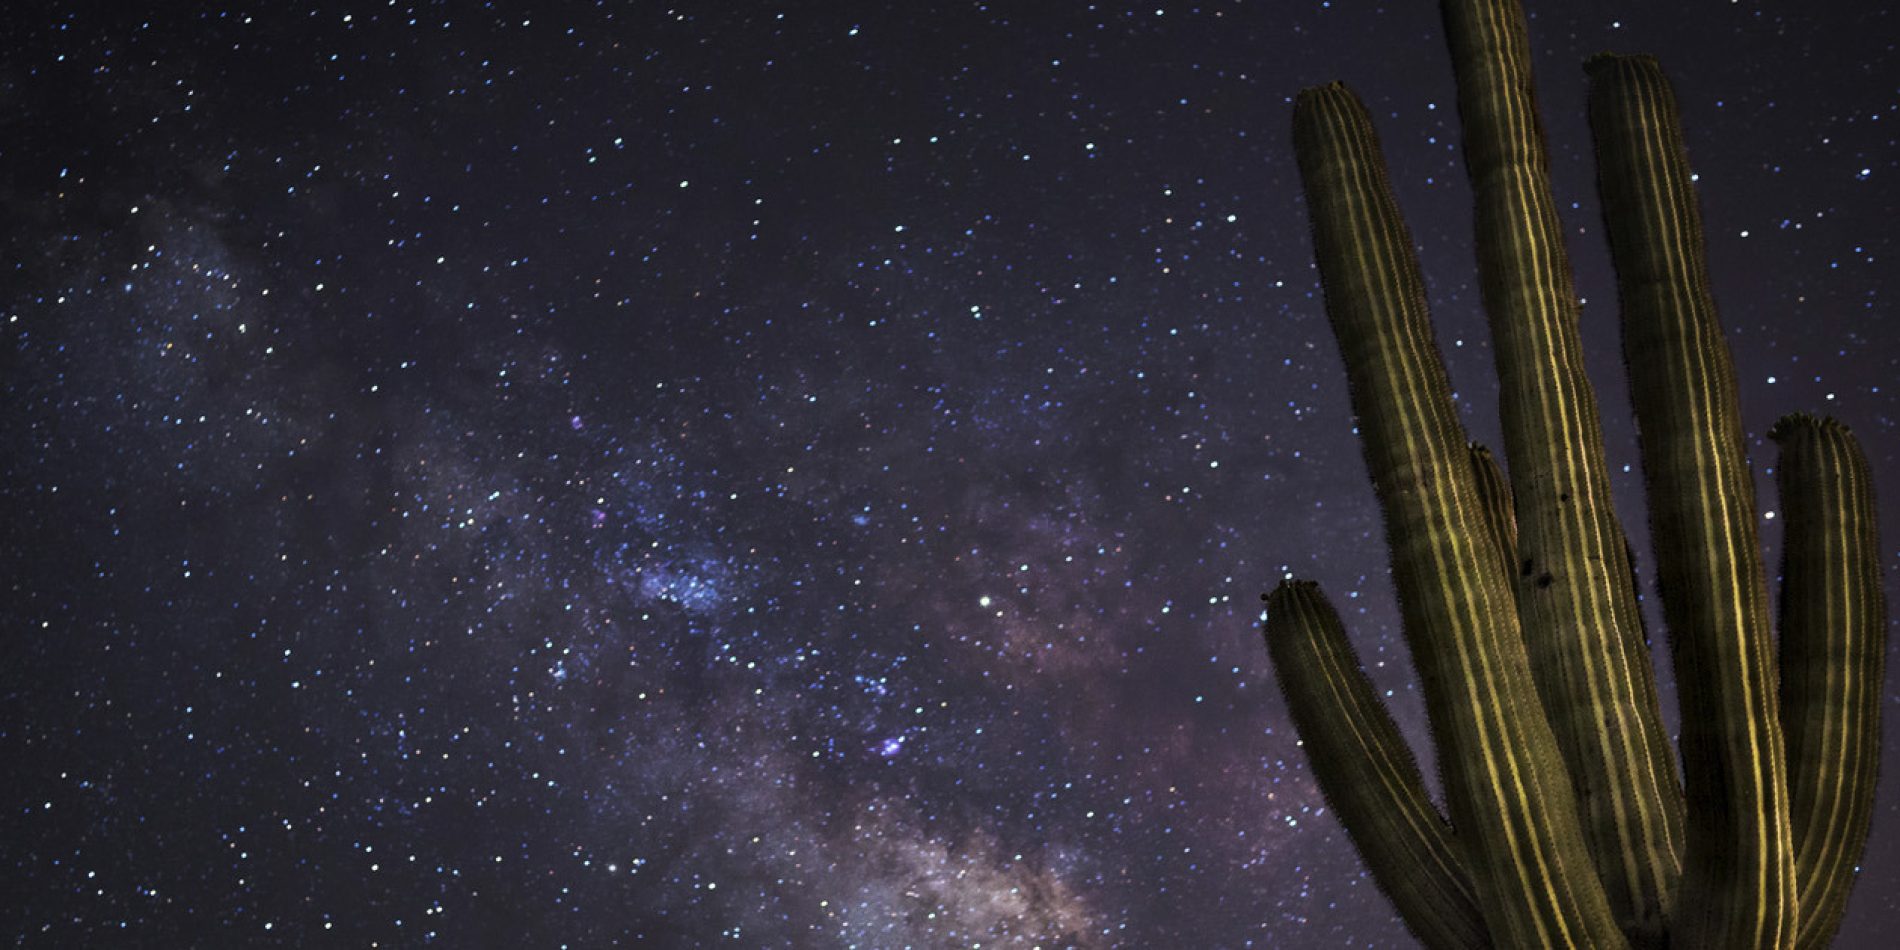 Arizona's Starry Nights